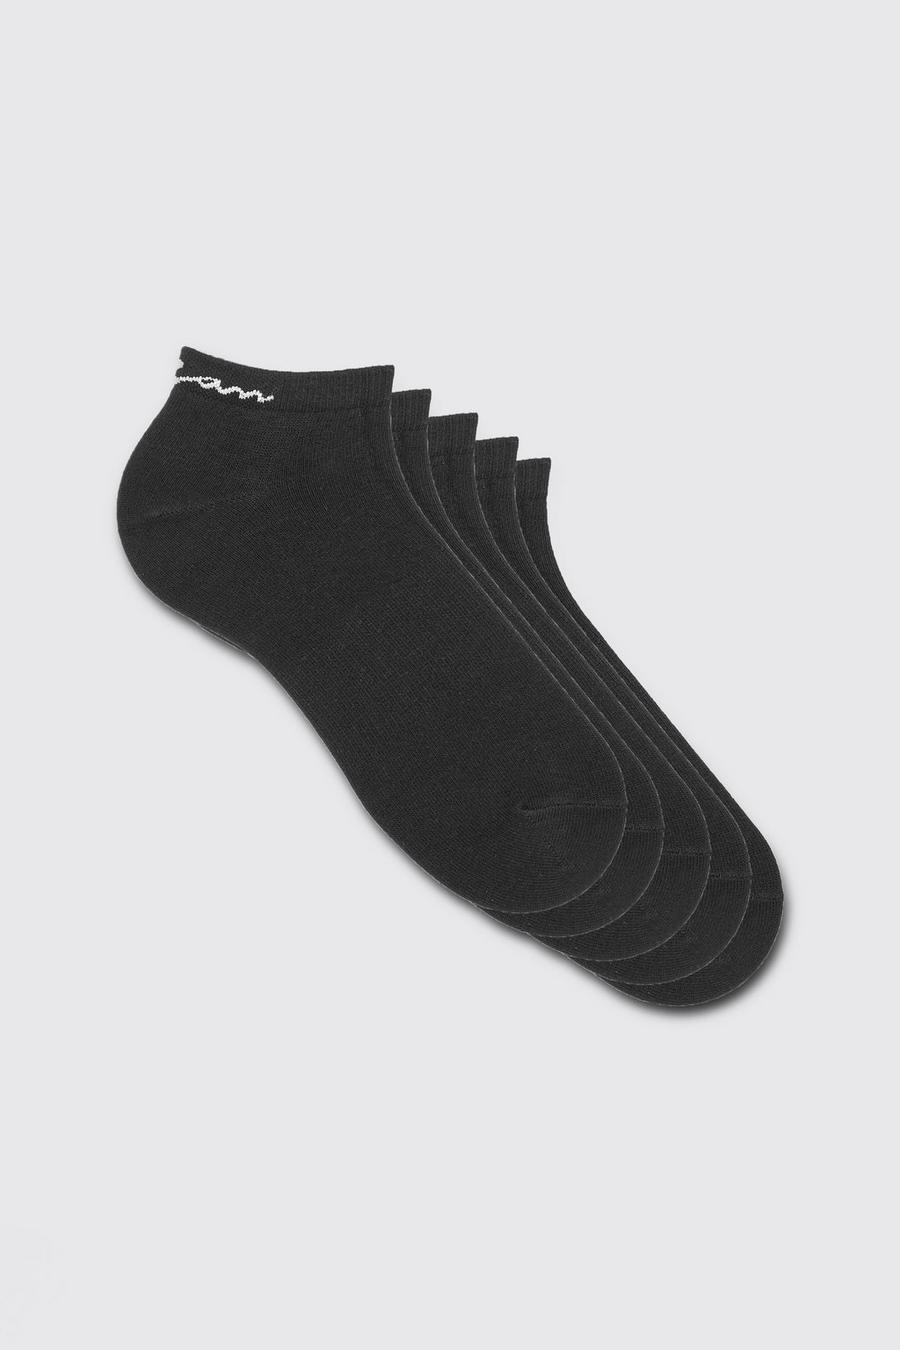 5er-Pack Man Signature Sneaker-Socken, Black schwarz